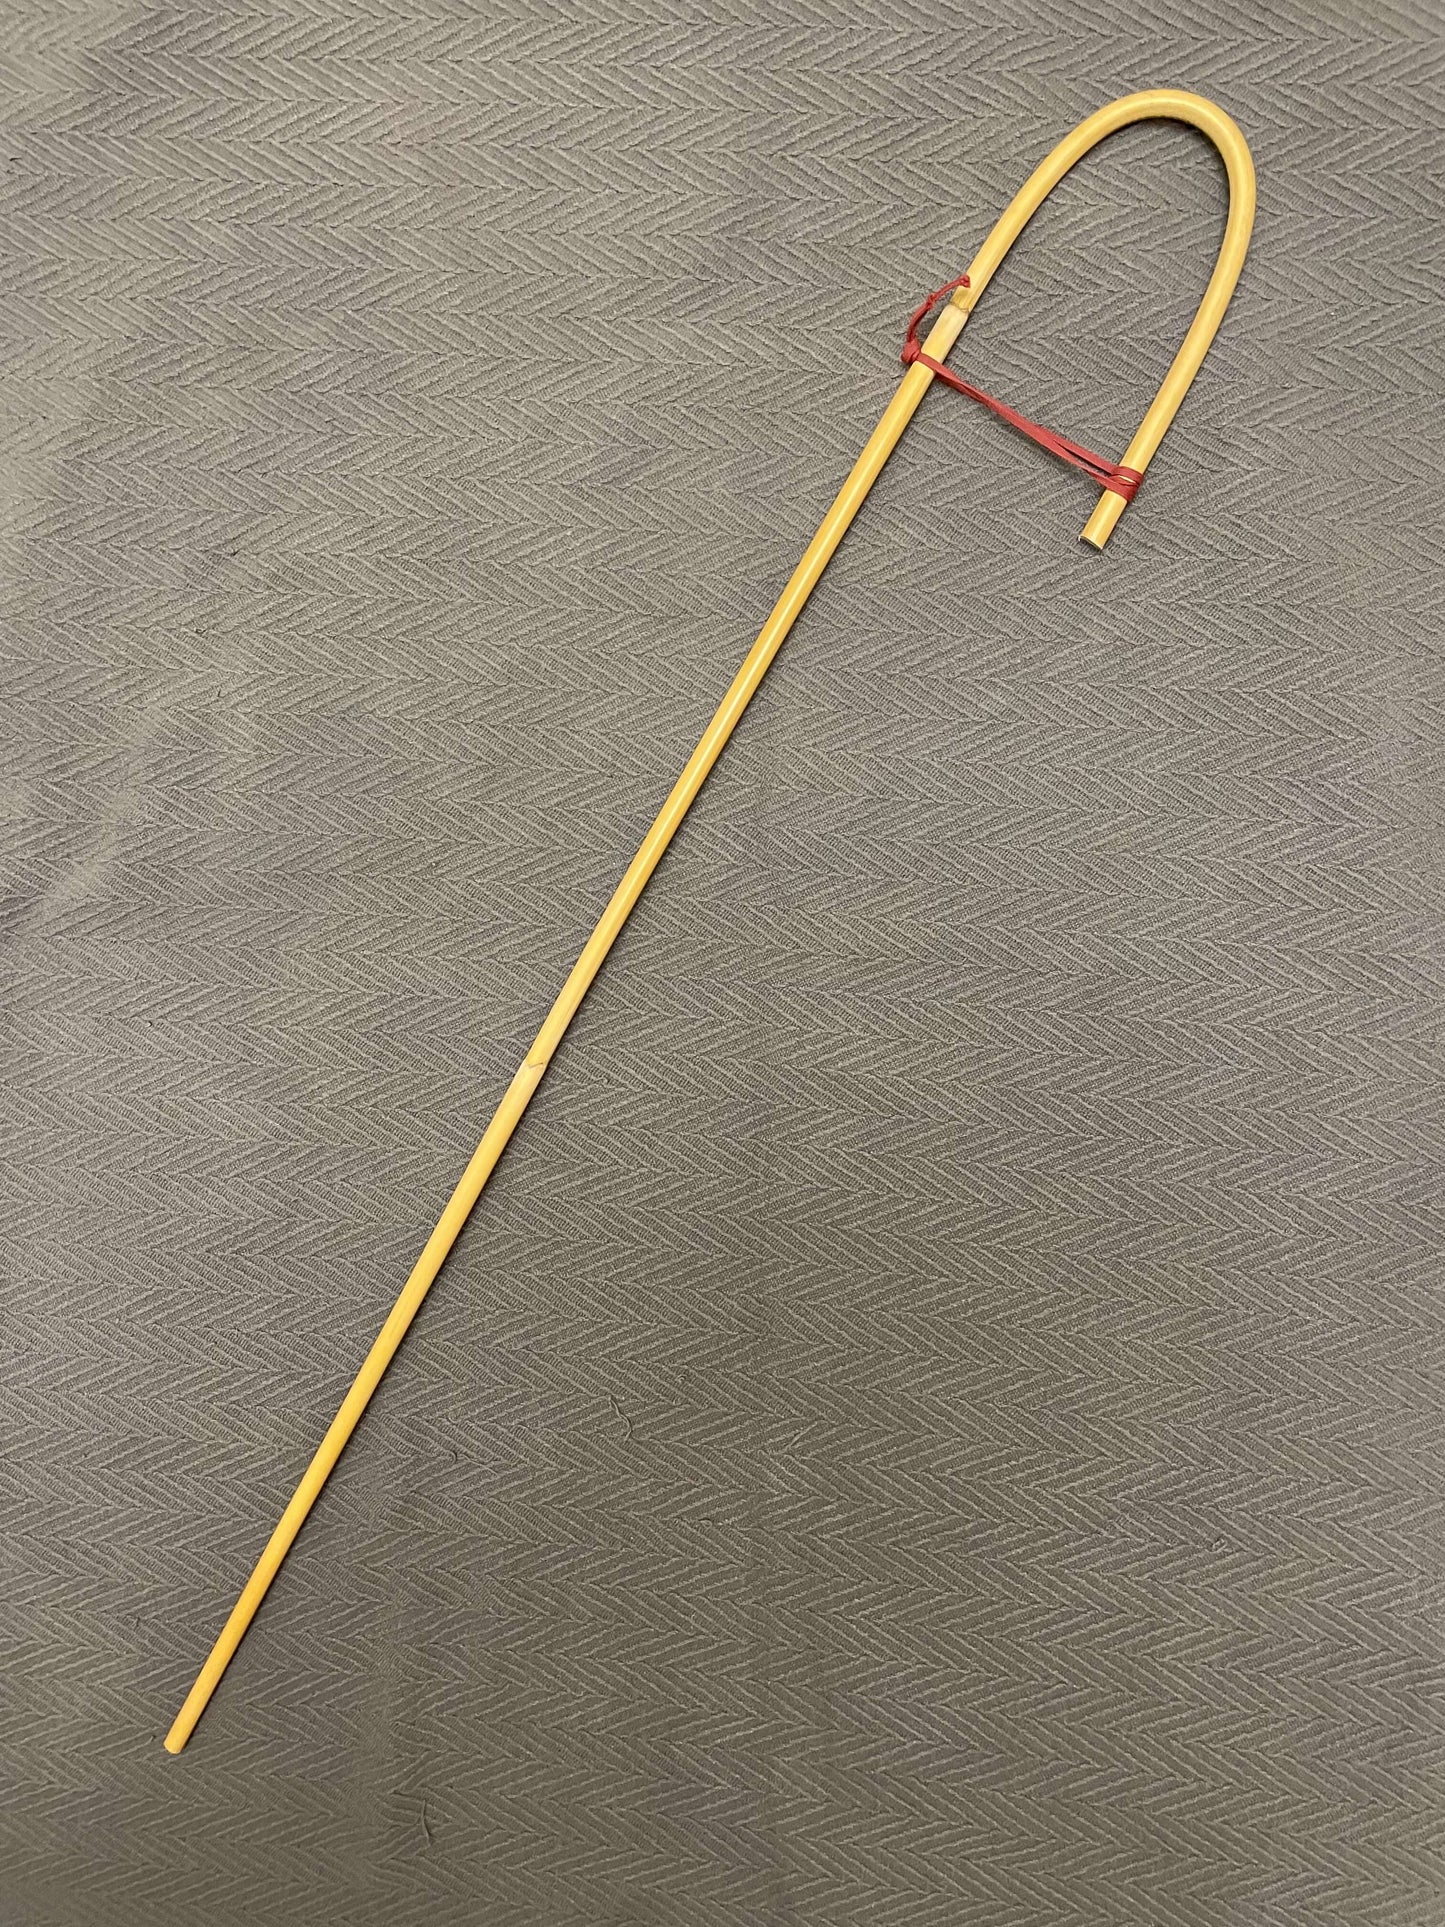 English Schoolmistress Traditional Crook Handle School Canes - Classic Dragon Rattan School Cane / Punishment Cane - 90-95 cms L & 7.5-8.5/9-10/10-11mm/11-12mm D